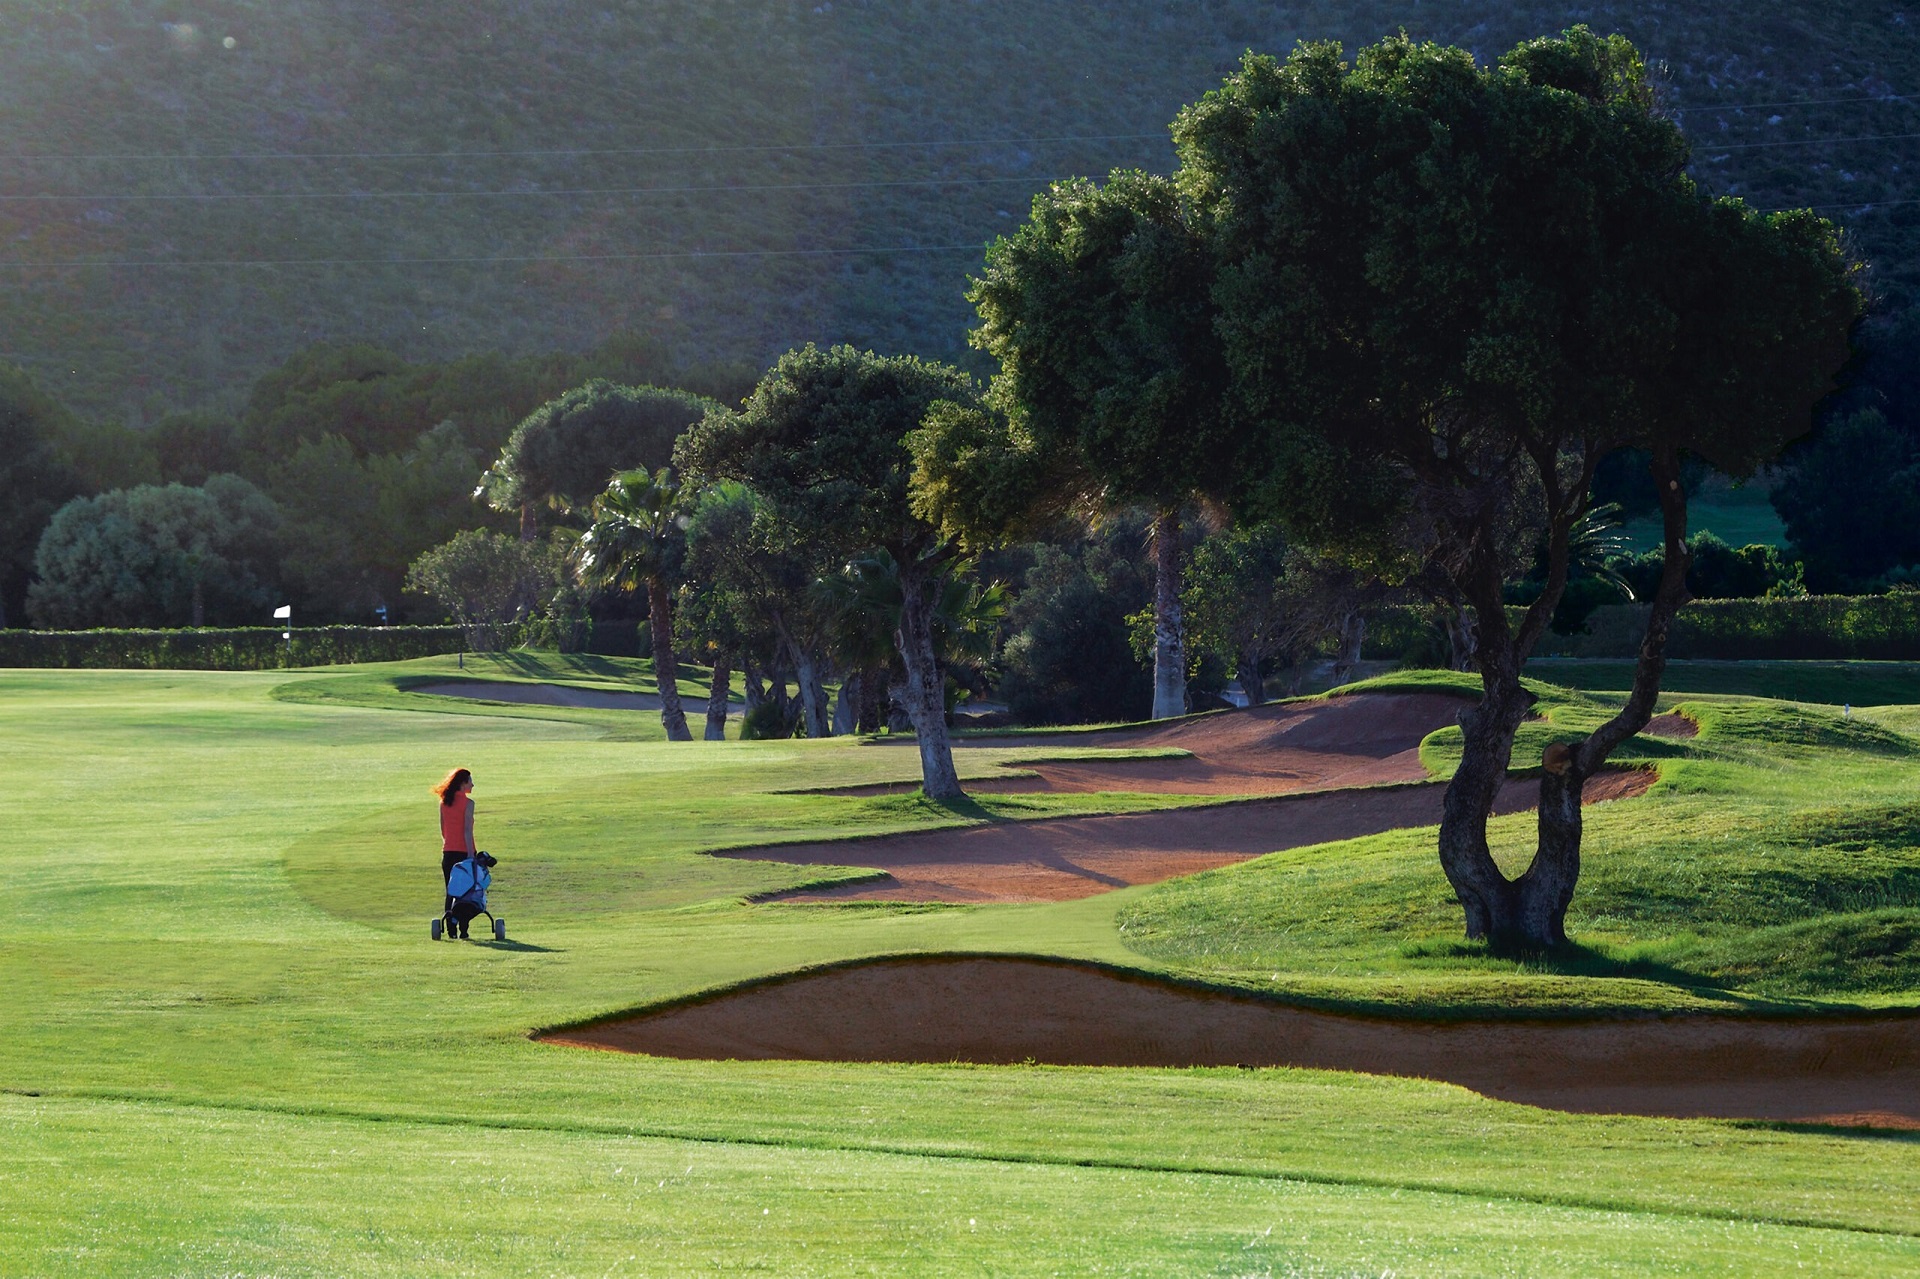 Capdepera Golf | Golf på Mallorca